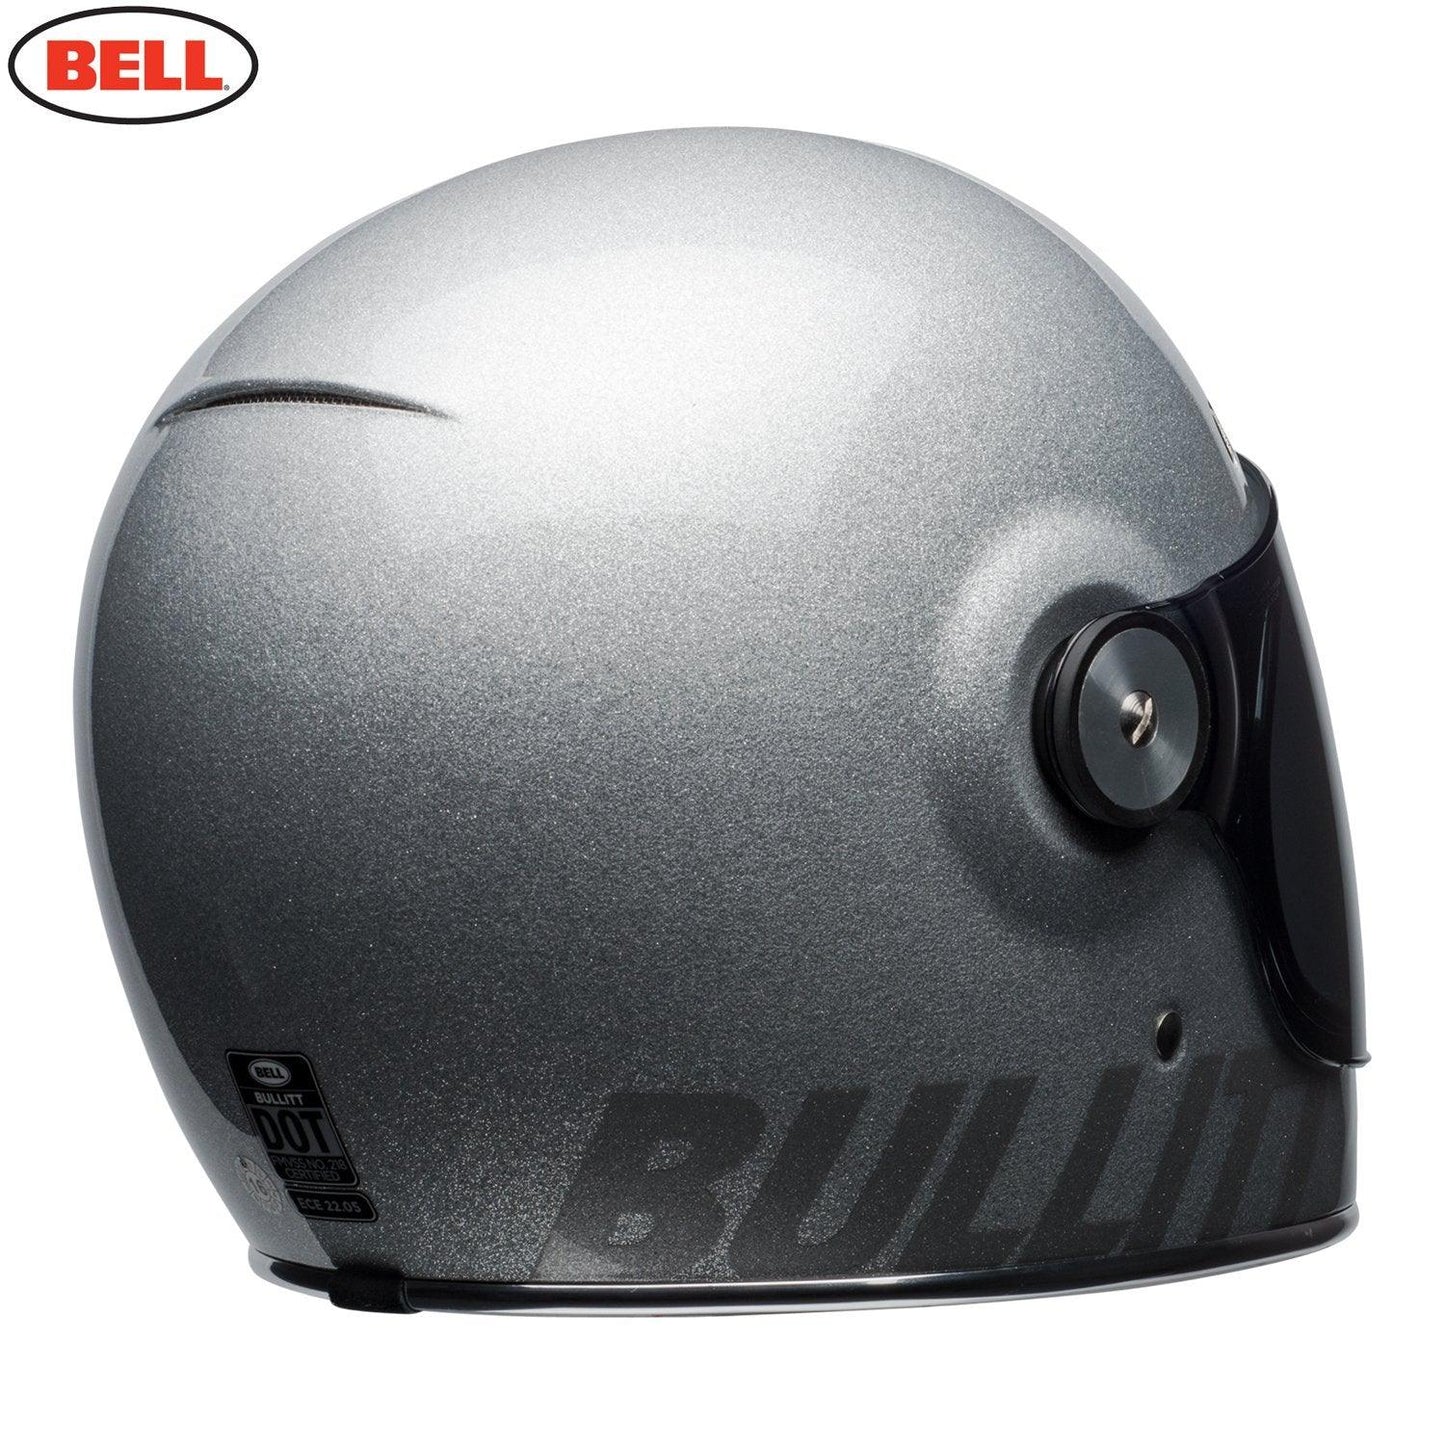 Bullitt - Newmarket Motorcycle Company 